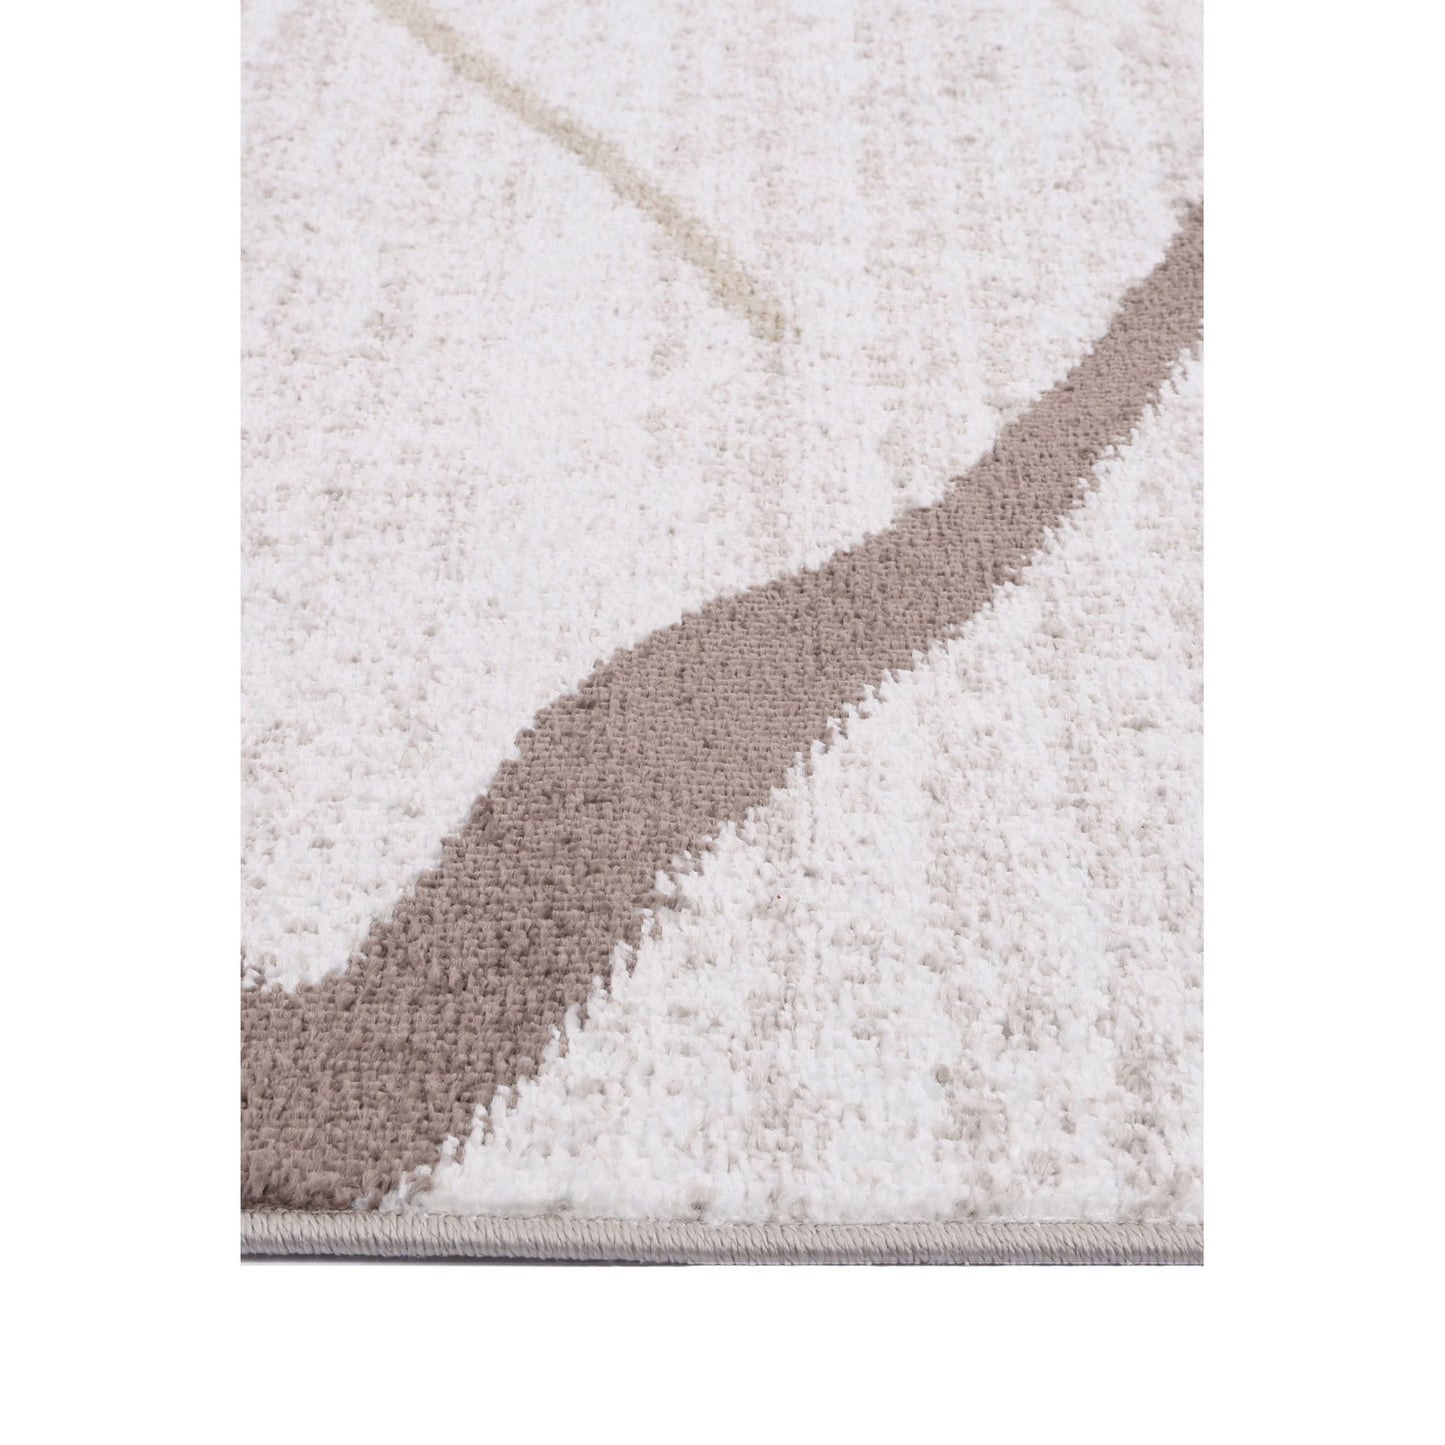 Kimberley Draft Line Modern Rug, 230x160cm, Latte / White